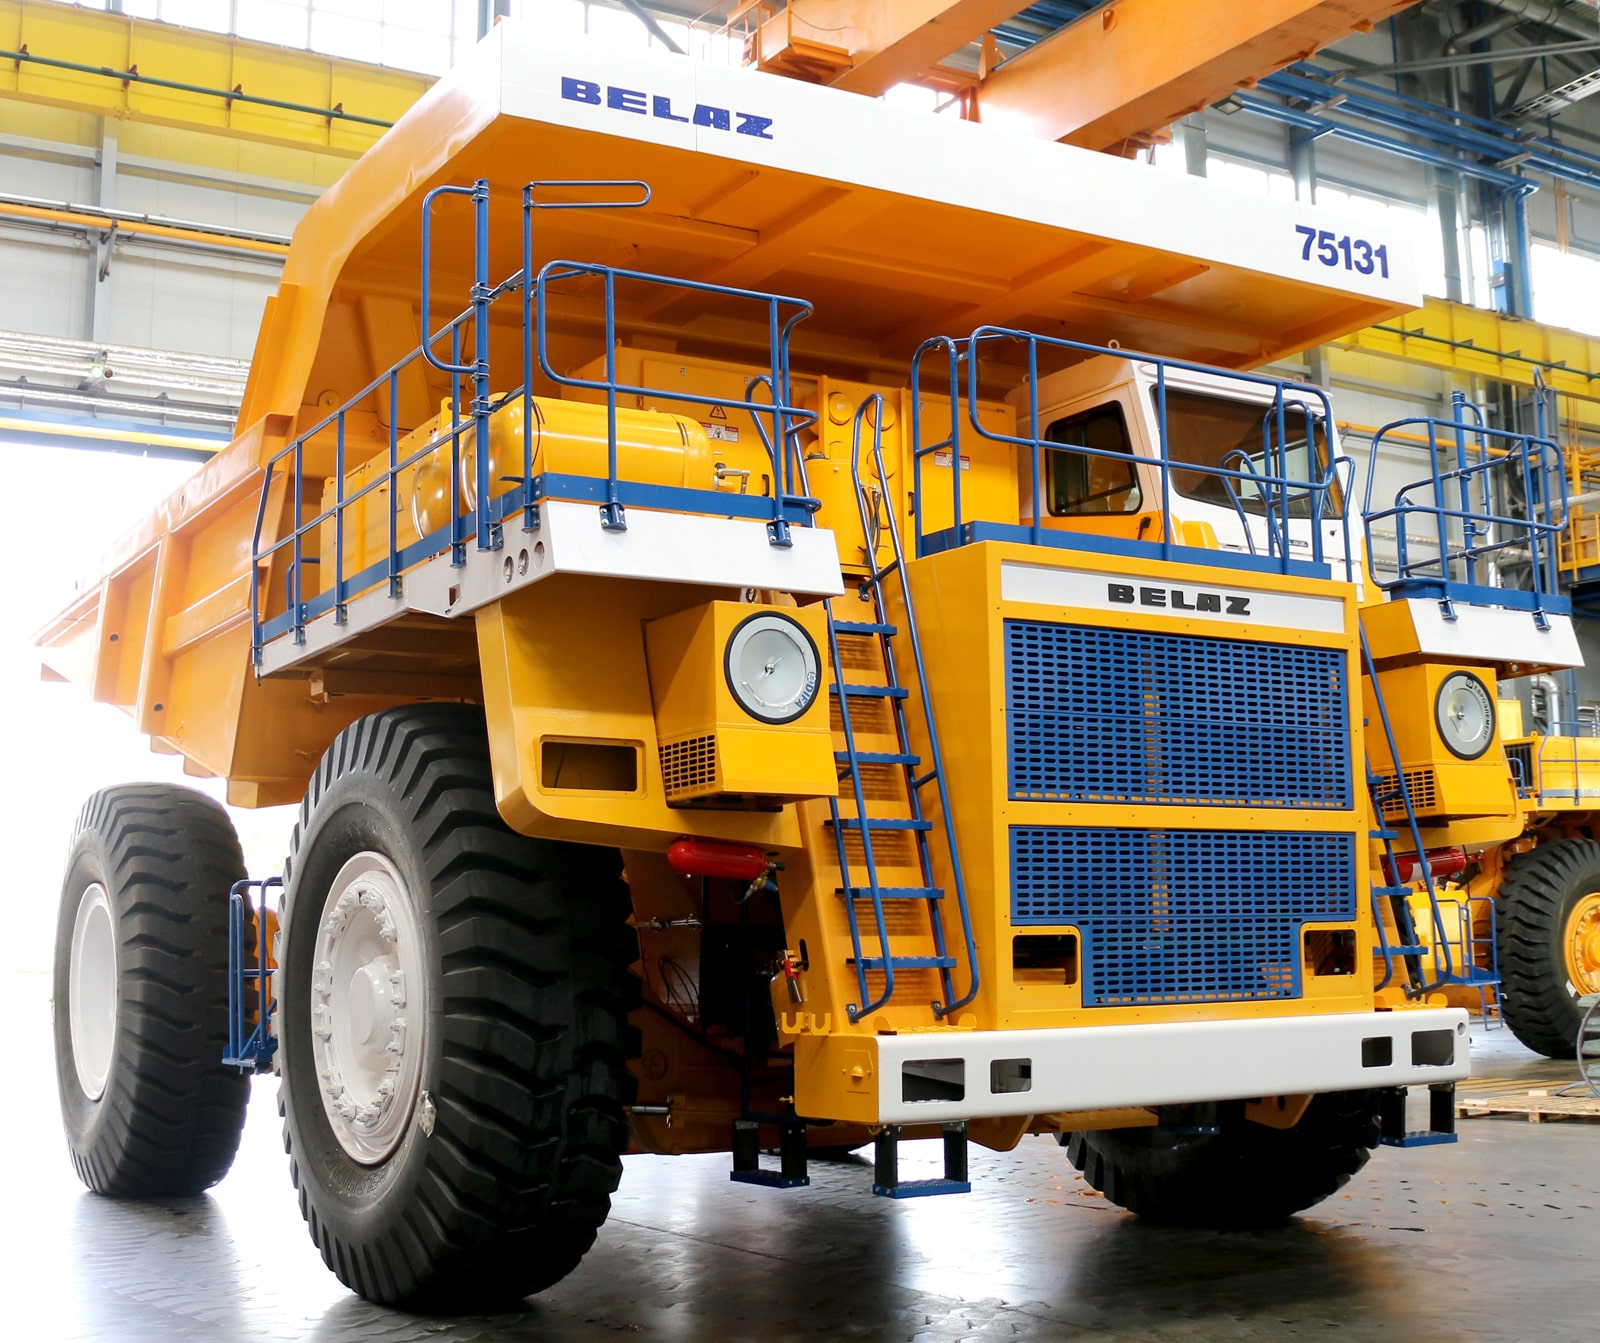 BELAZ 75131 dump truck undergoes engine replacement with KTA50-C1600 for enhanced performance.